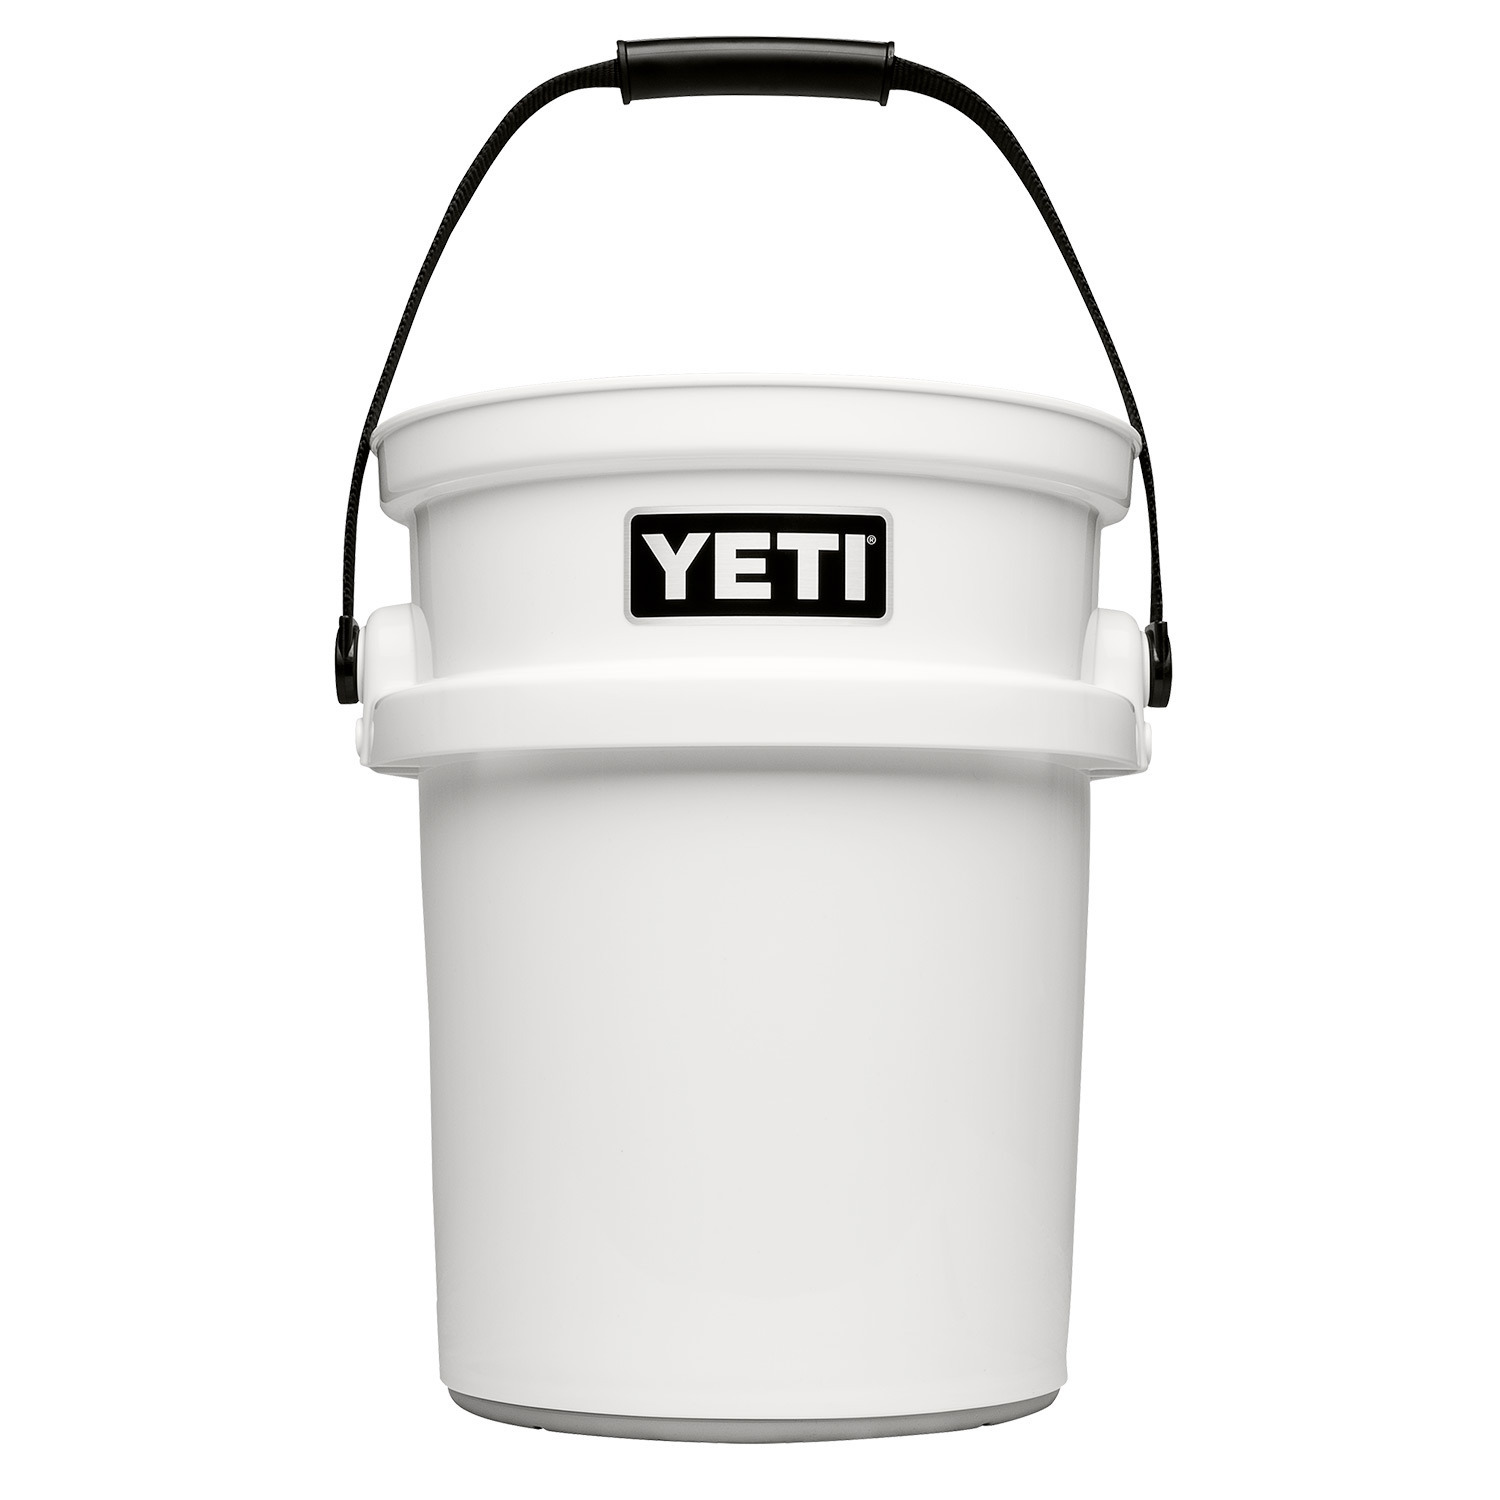 The @YETI 5 gallon Loadout Bucket! #yeti #loadout #loadoutbucket